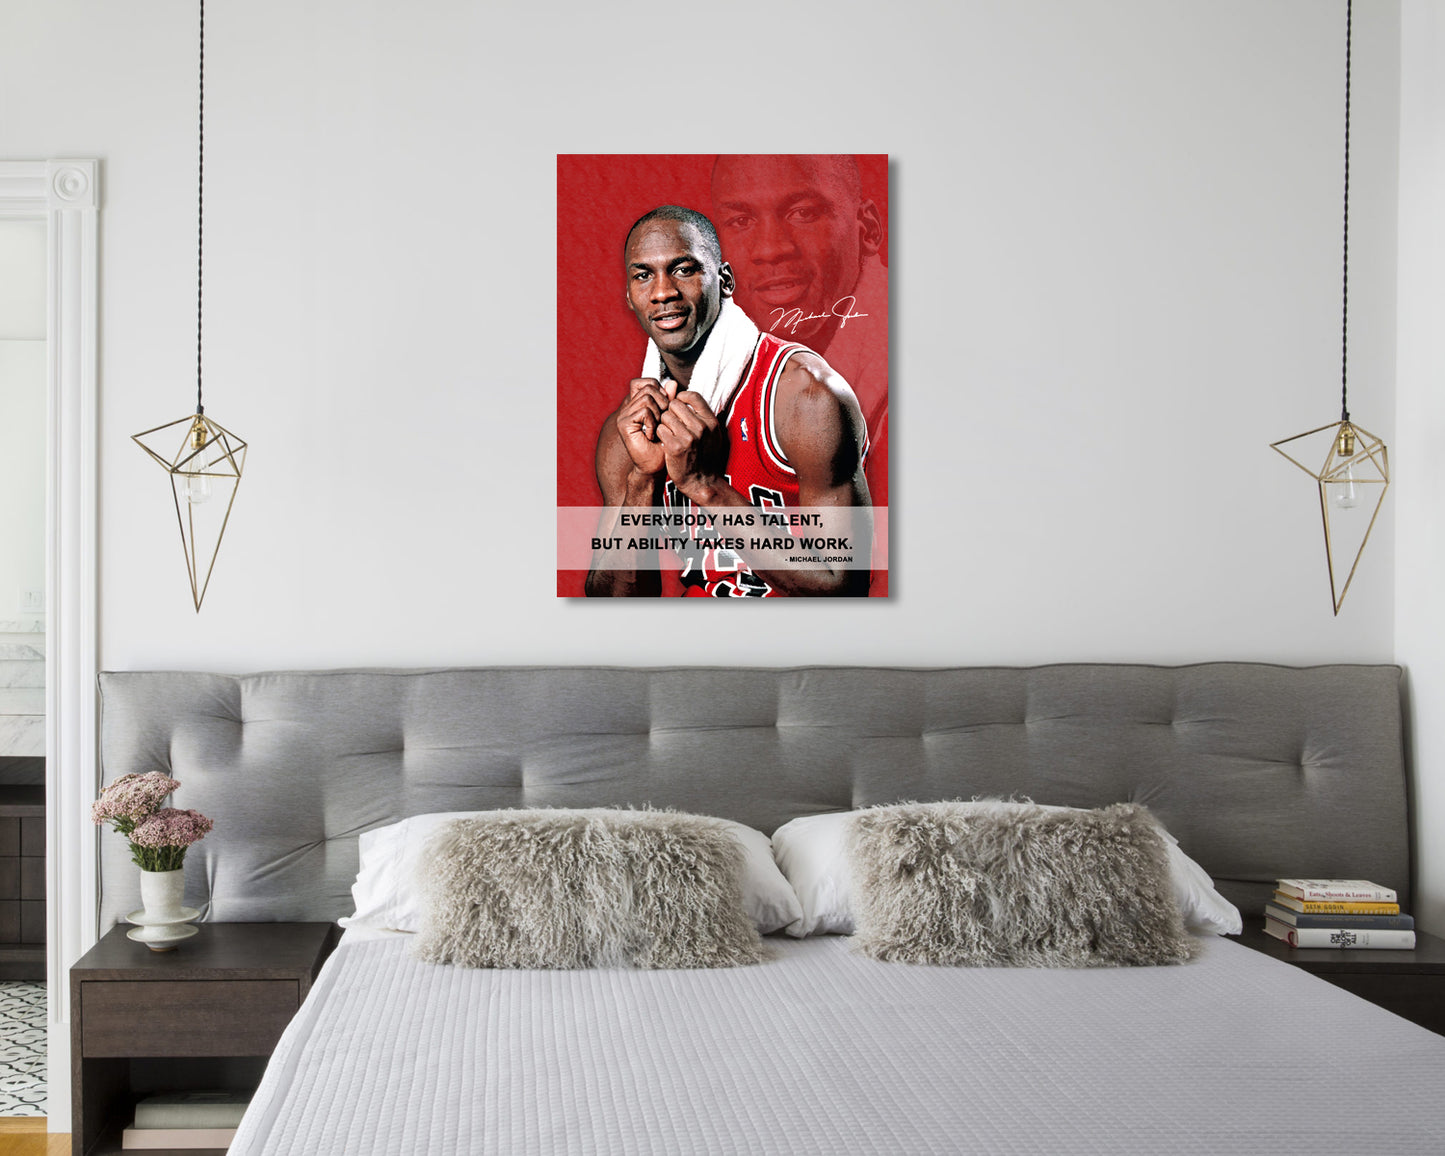 Michael Jordan Everybody has talent Canvas Wall Art 